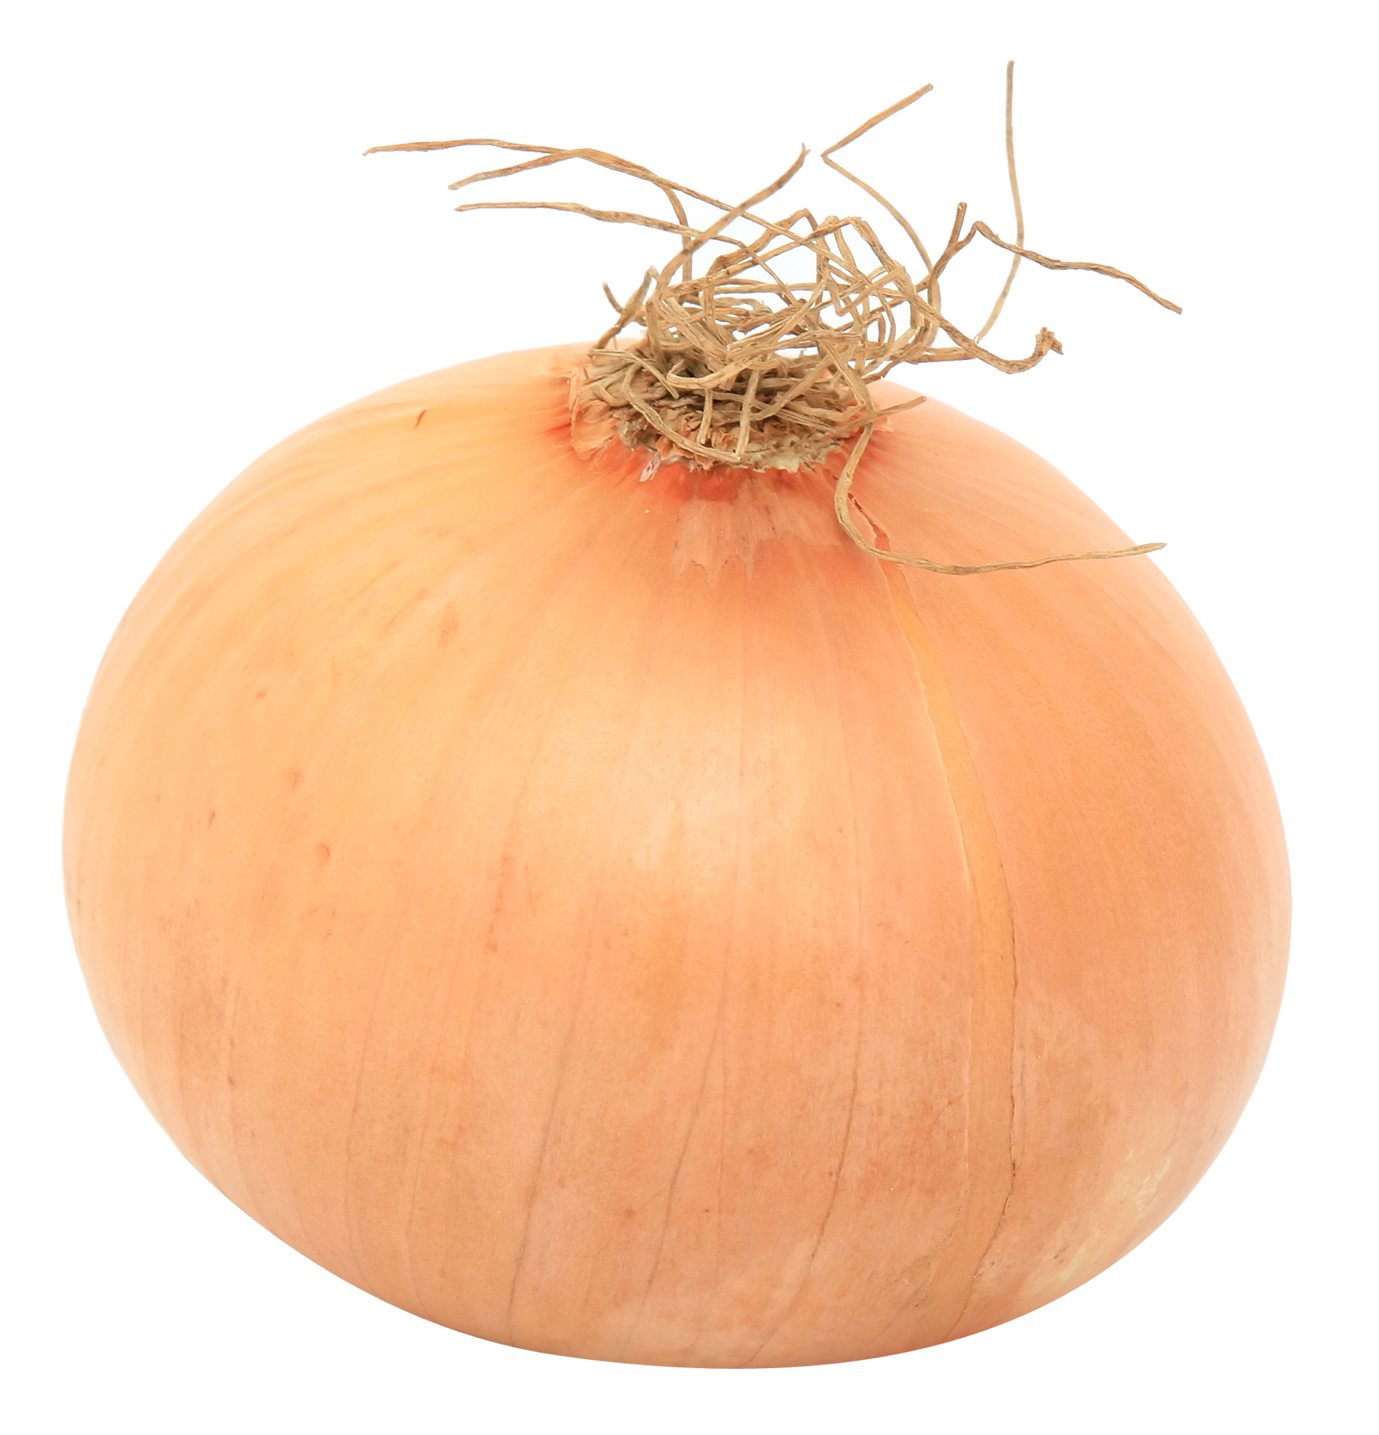 A Close Up Of A Onion